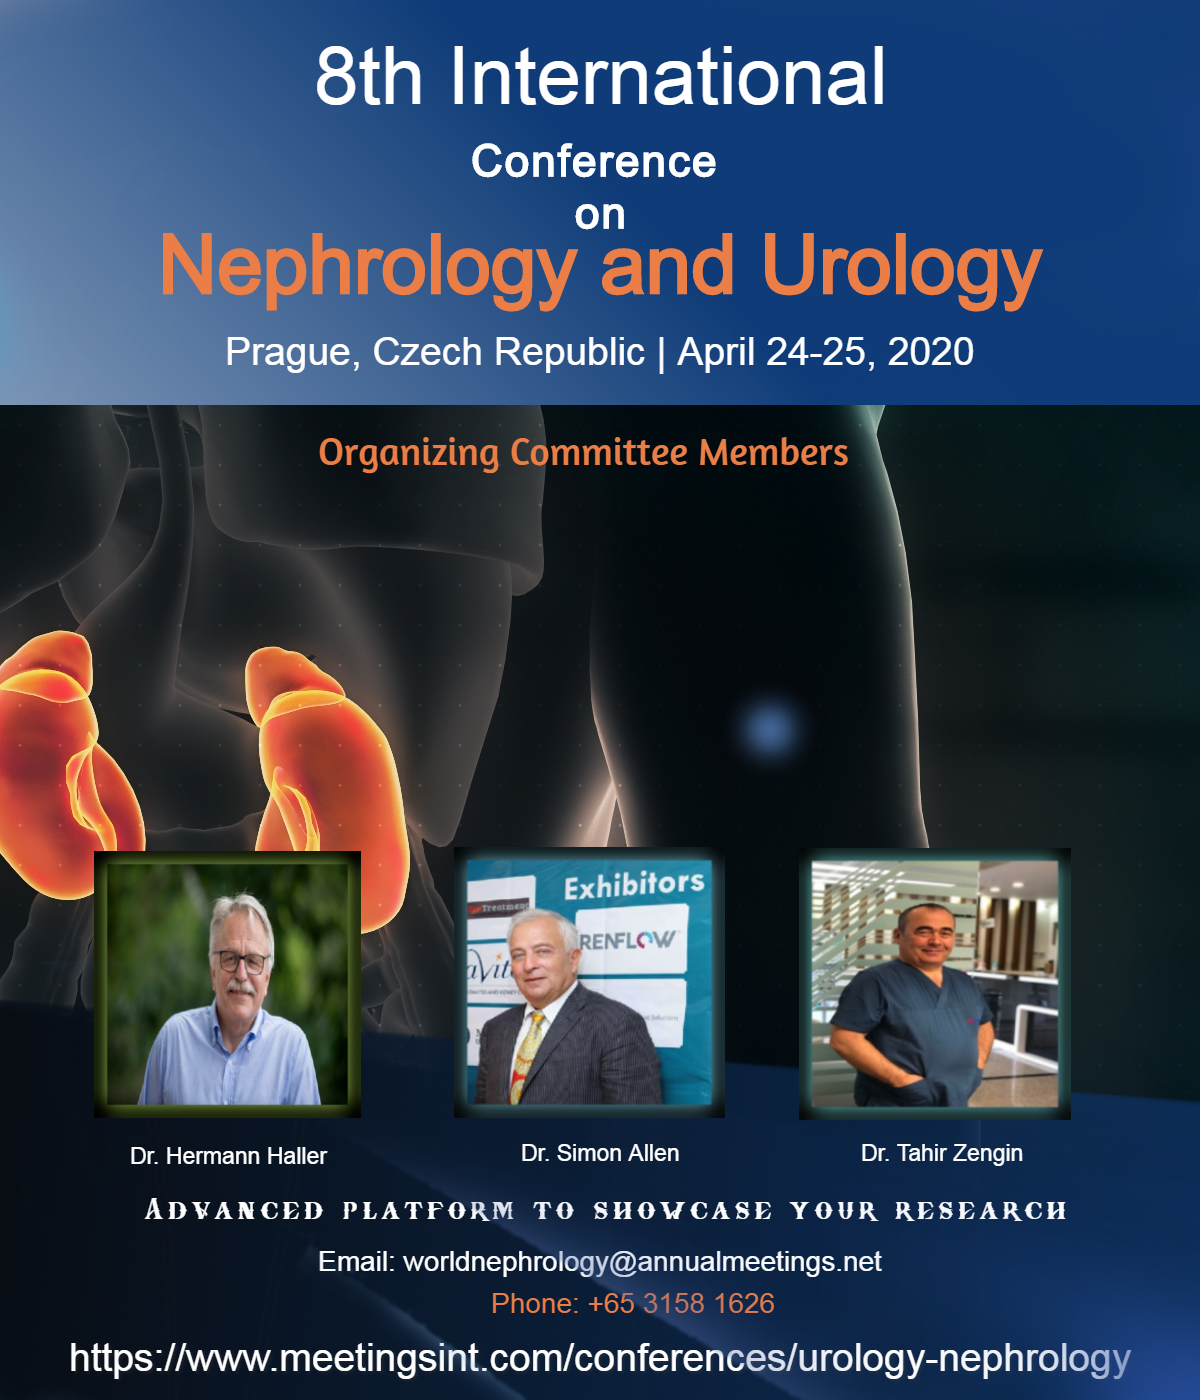 8th International Conference on Nephrology and Urology, Prague, Czech Republic